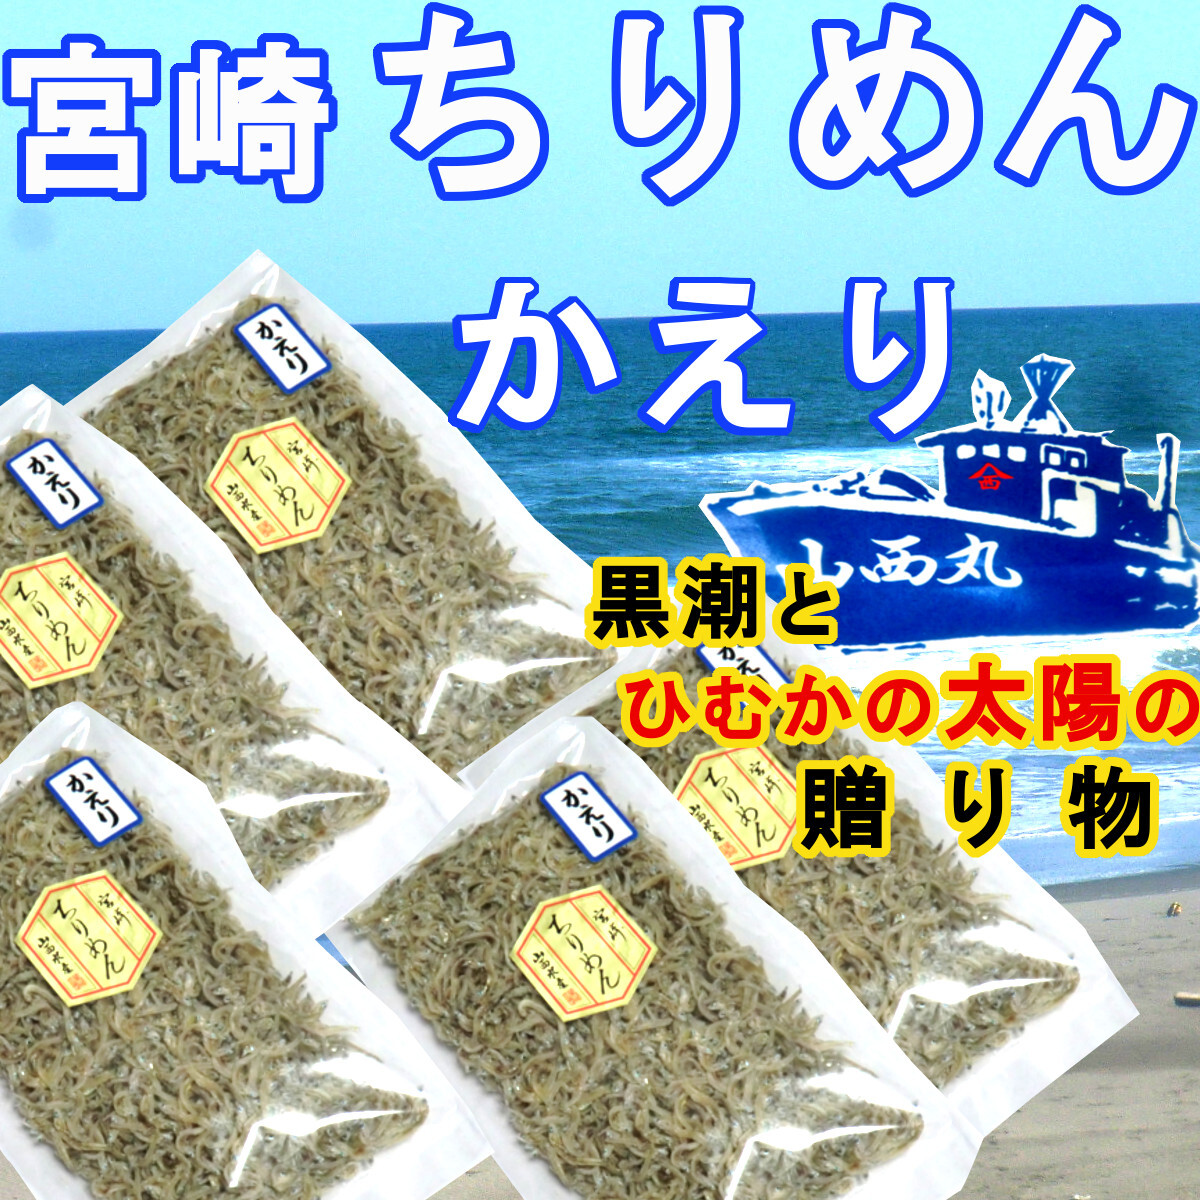 Miyazaki Chirimen Kaeri 100G × 5 мешков Kuroshio и подарки Hyuga подарки кальция, поставляемый источник Chirimenjako Sanishi Fisheries Sendo Dry Rice, предлагает начинки начинки